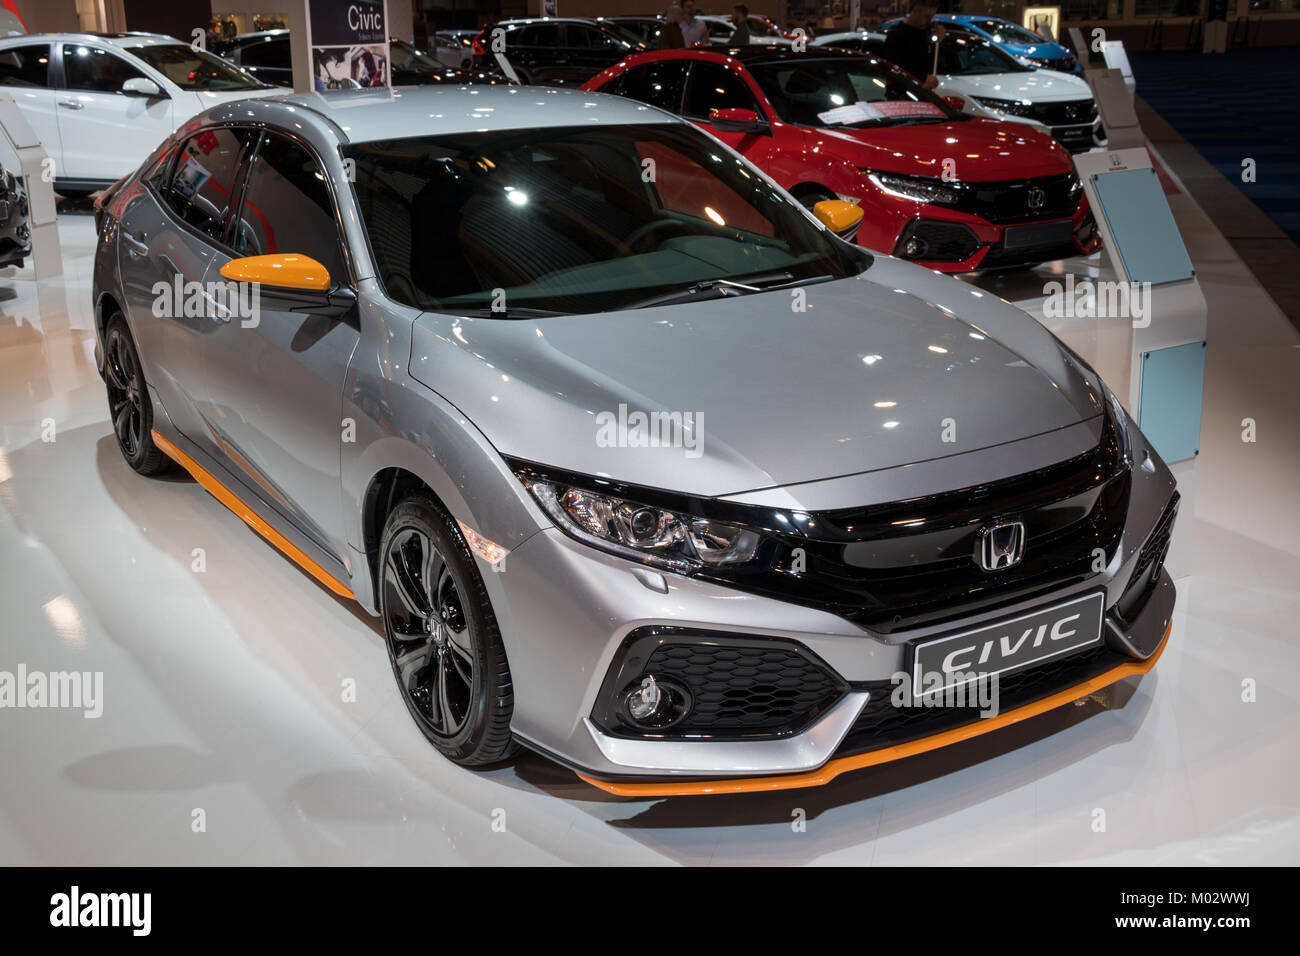 Brüssel - Jan 10, 2018: Honda Civic Auto auf dem Automobil-Salon in Brüssel vorgestellt. Stockfoto